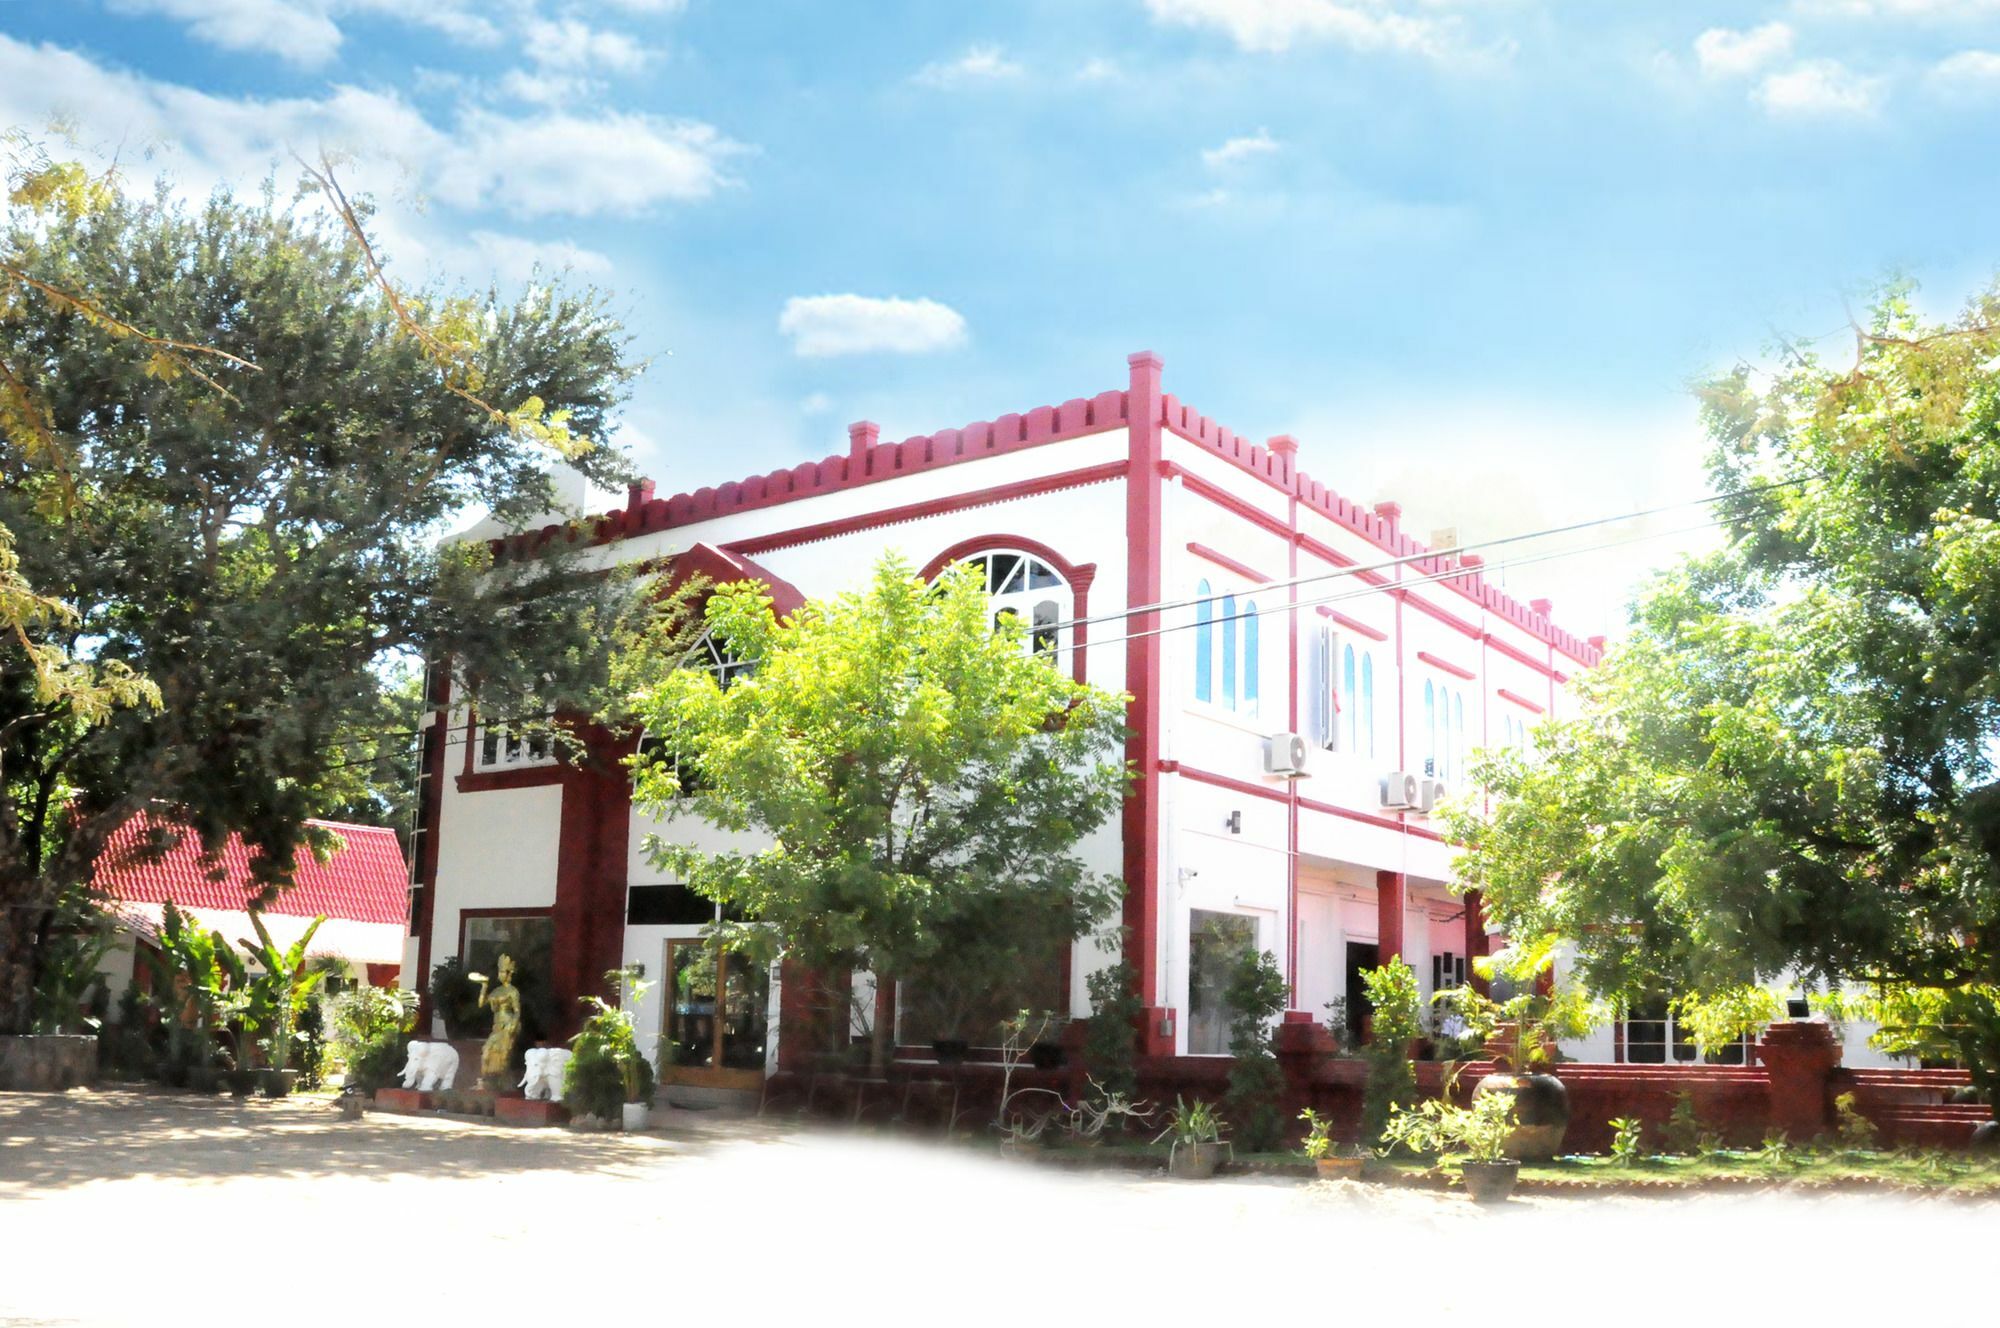 La Casa Di Bagan Nan Eain Thu Hotel 外观 照片